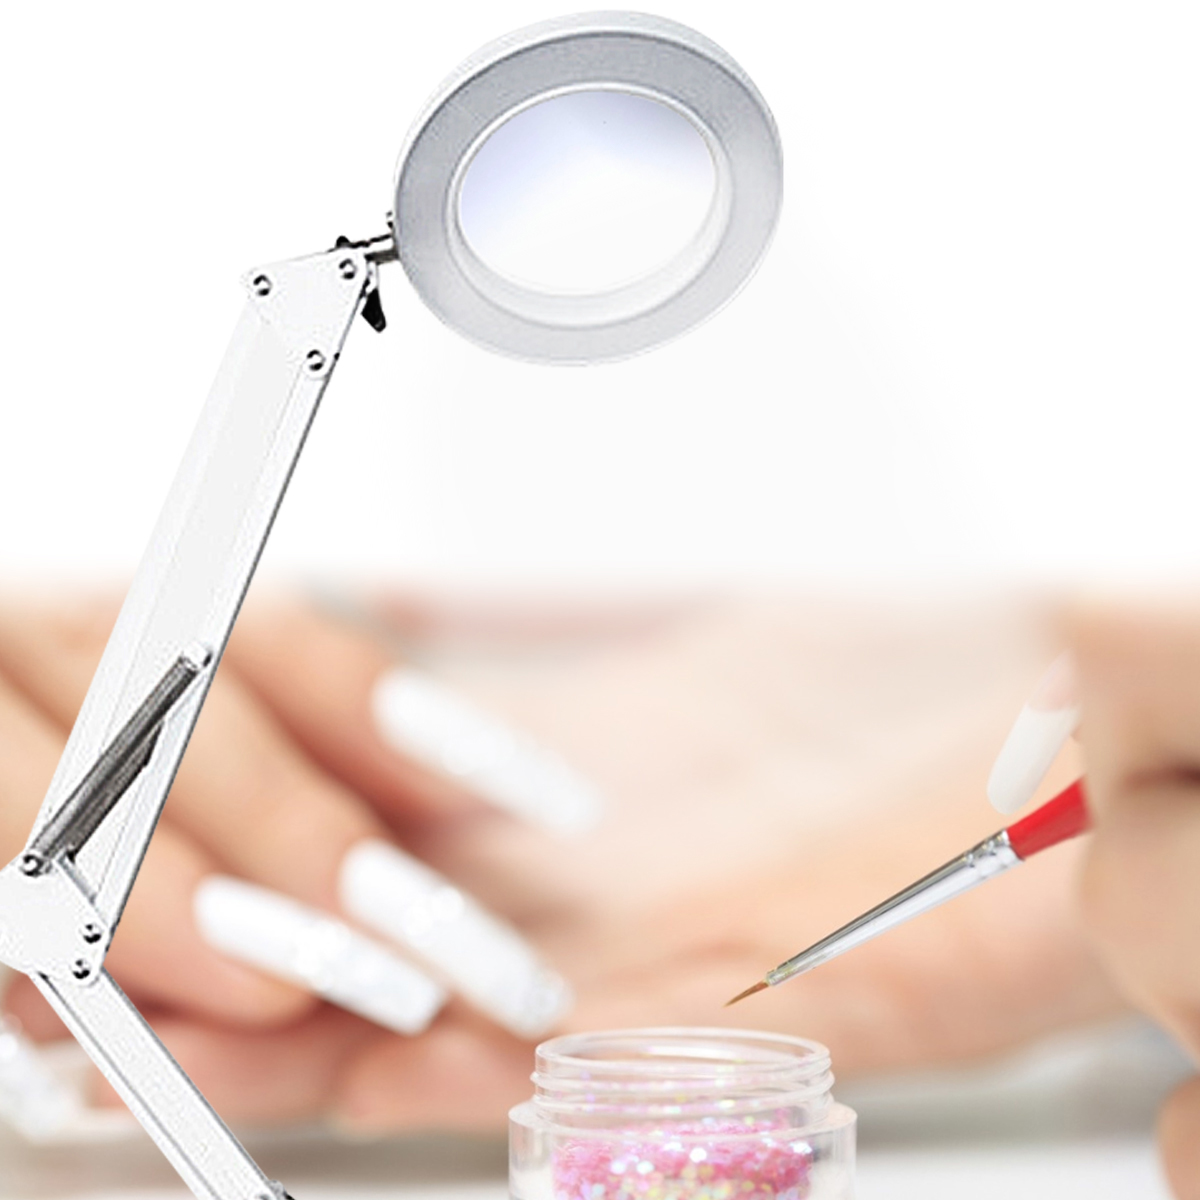 8X Illuminated Magnifier USB 3 Colors LED Glass Table Lamp/Skincare Beauty Tool - White Colour